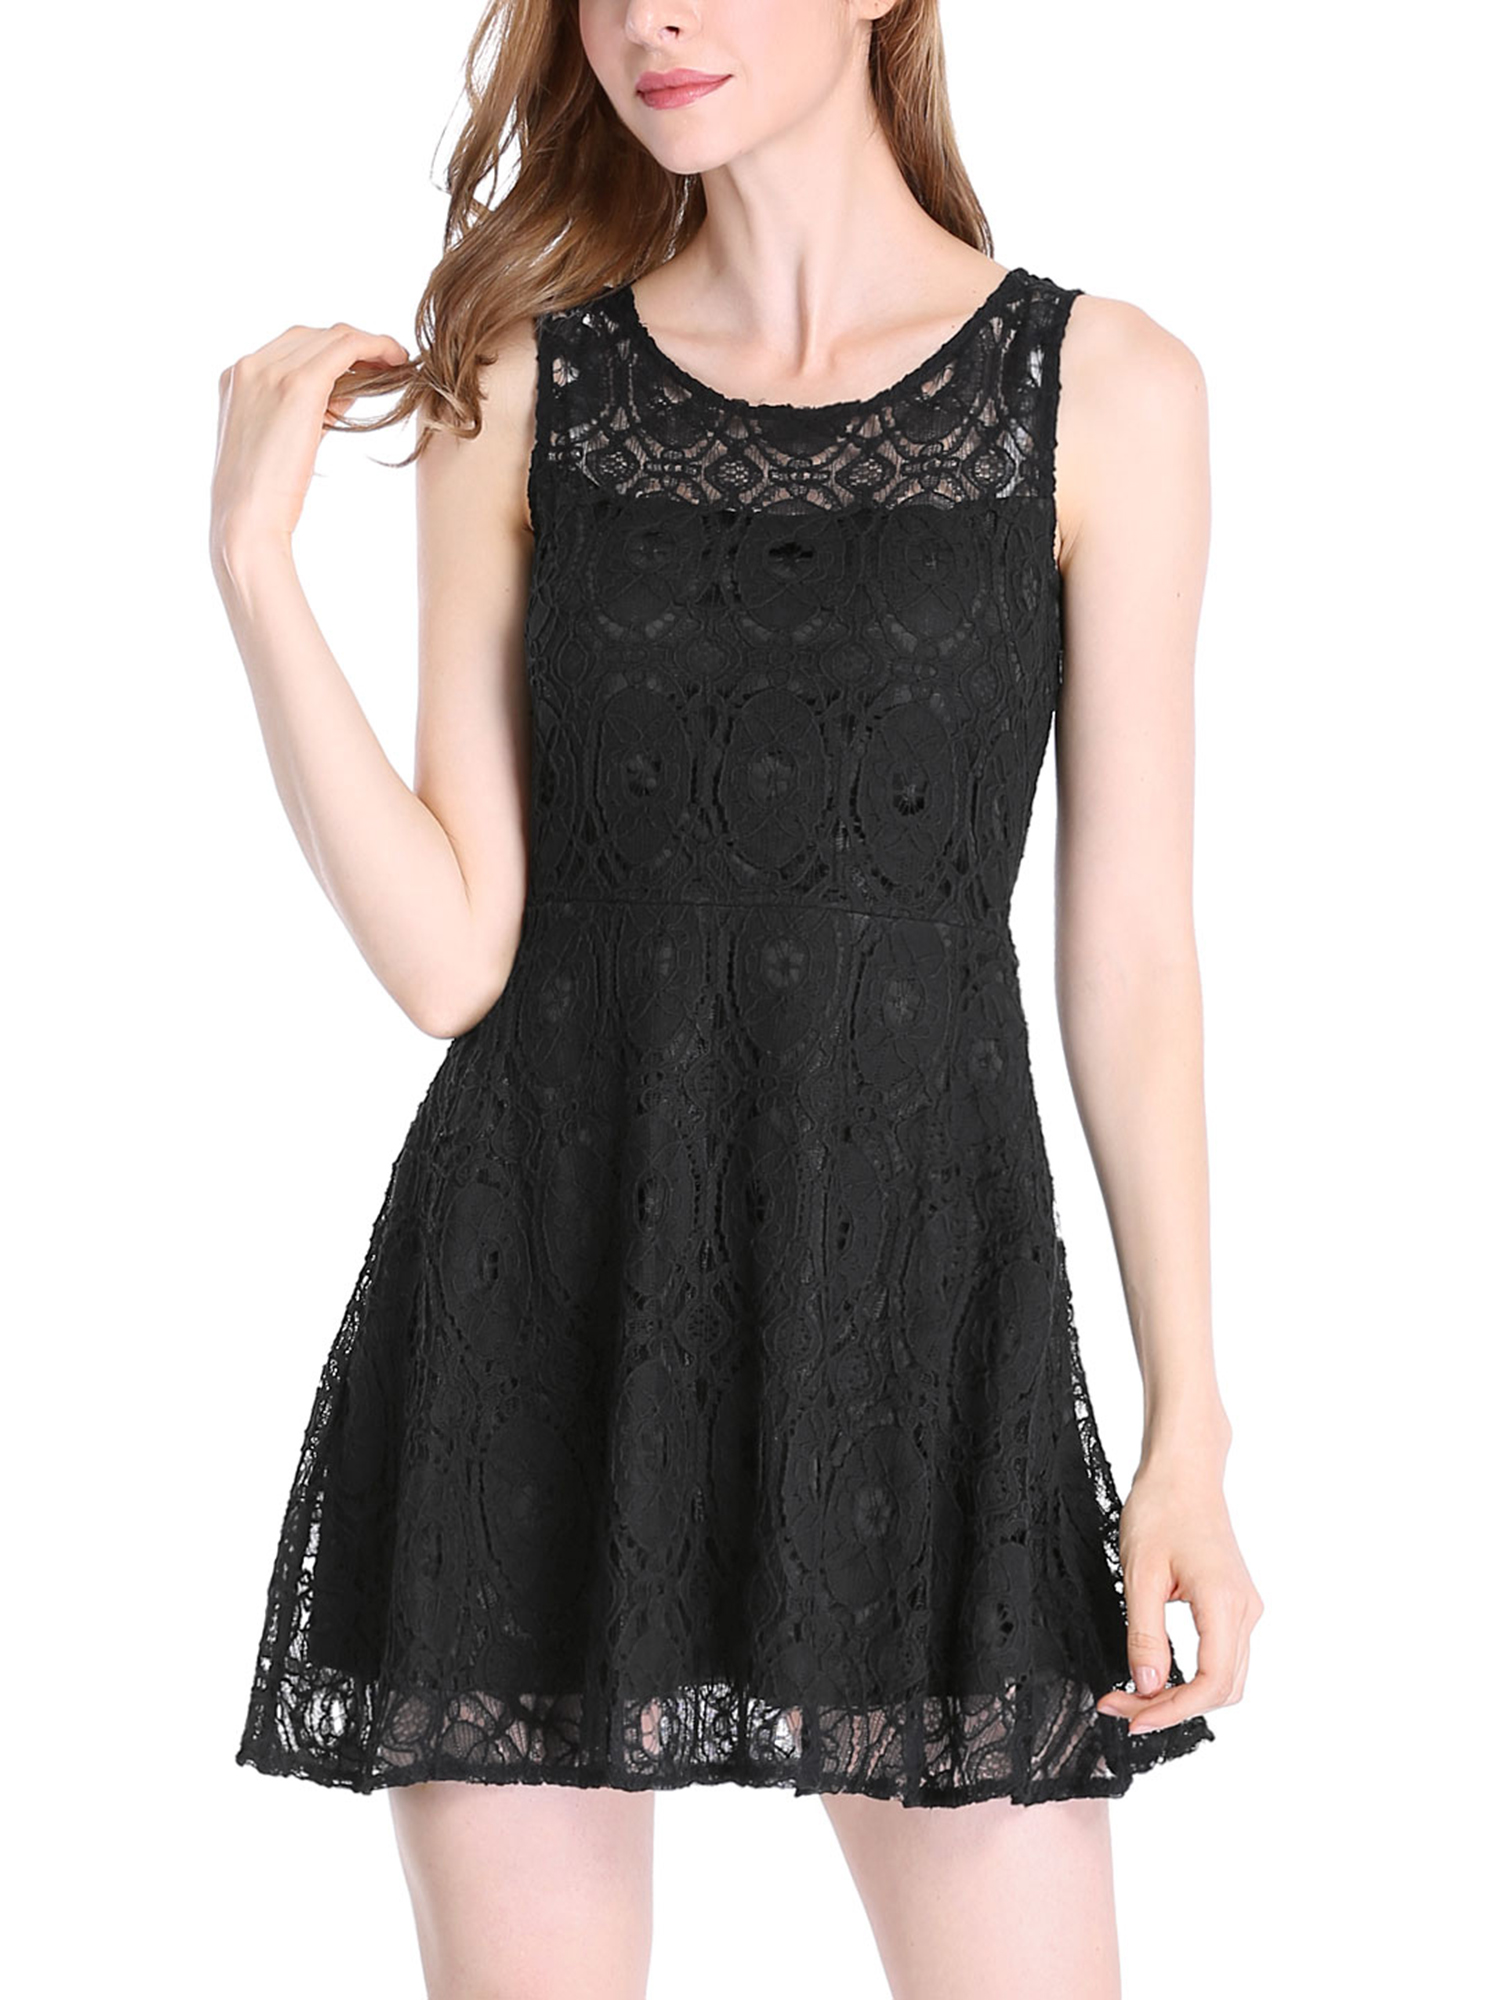 MODA NOVA Junior's Floral Lace Sleeveless Semi Sheer Flare Mini Dress Black L - image 2 of 6